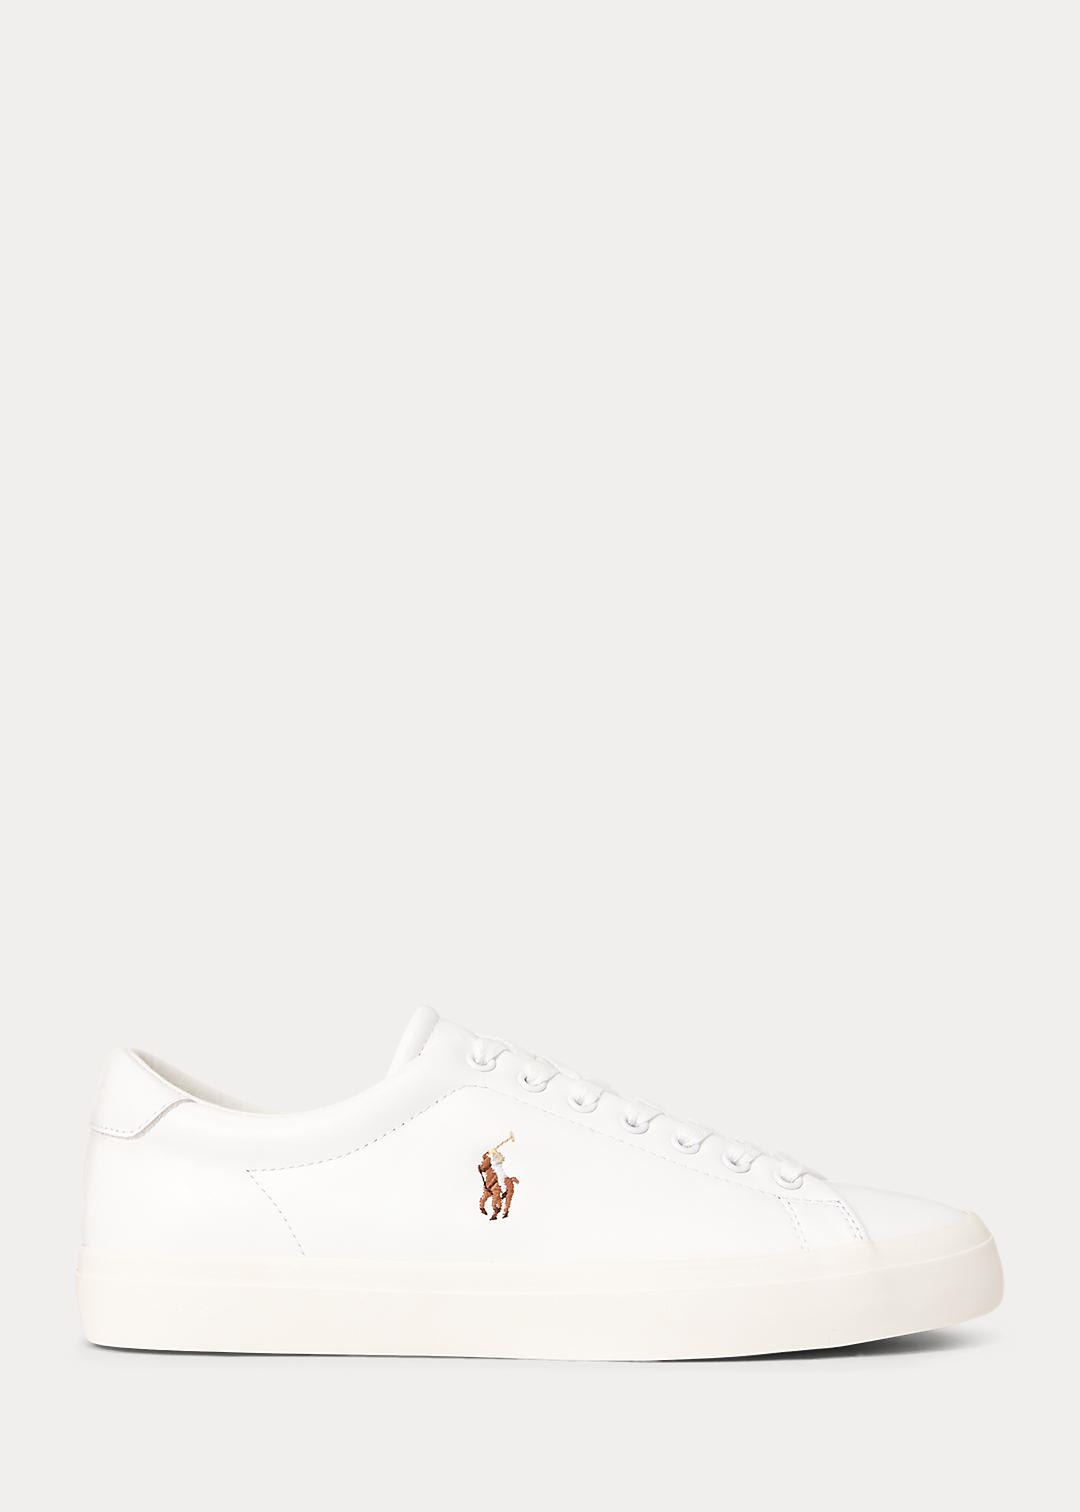 Perch crisis banana Men's Longwood Leather Sneaker | Ralph Lauren